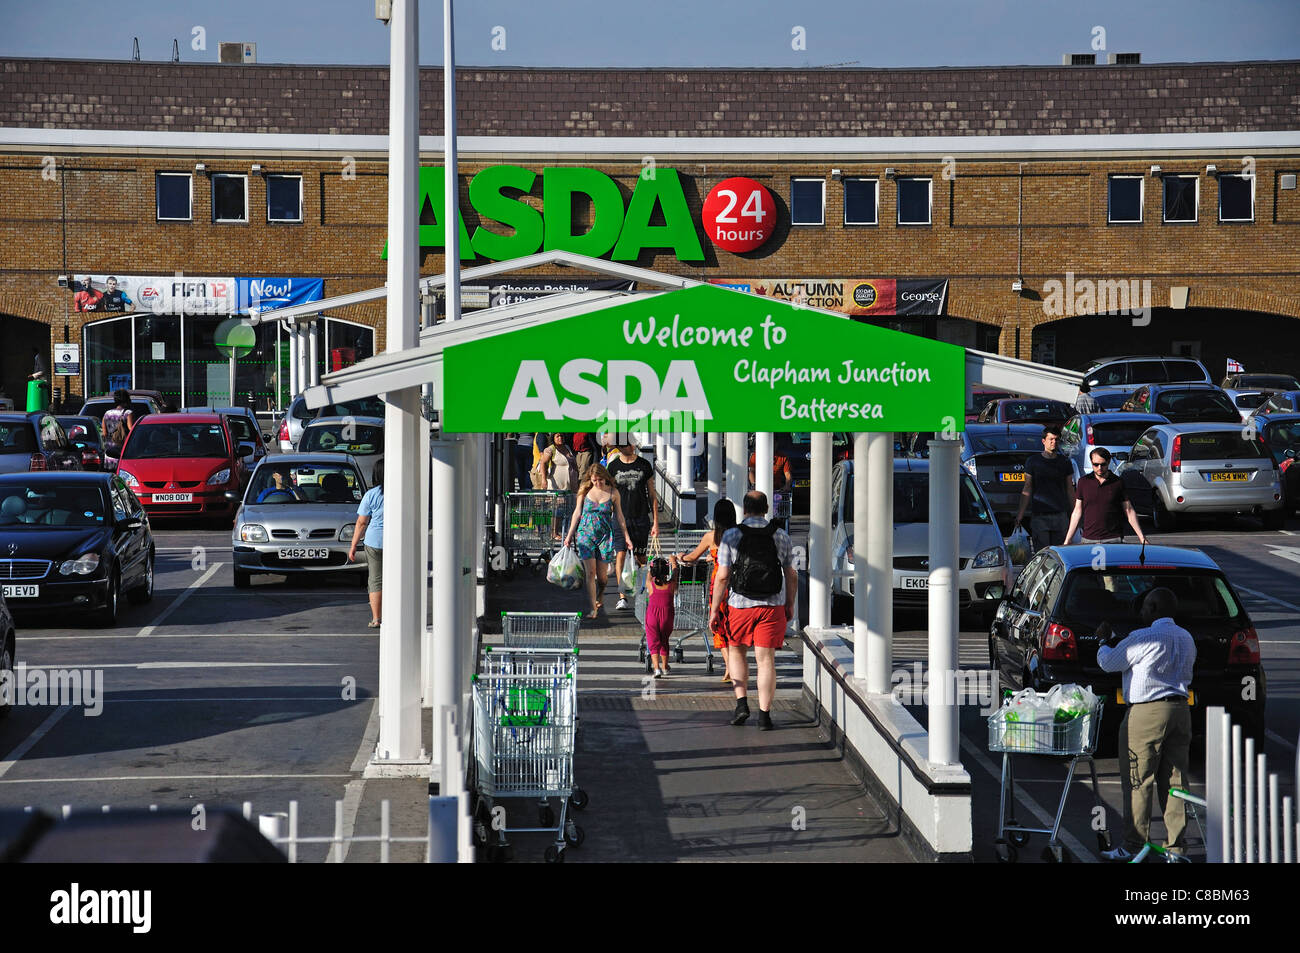 Supermarché ASDA, Lavender Hill, Clapham Junction, Battersea, London Borough of Wandsworth, Londres, Angleterre, Royaume-Uni Banque D'Images